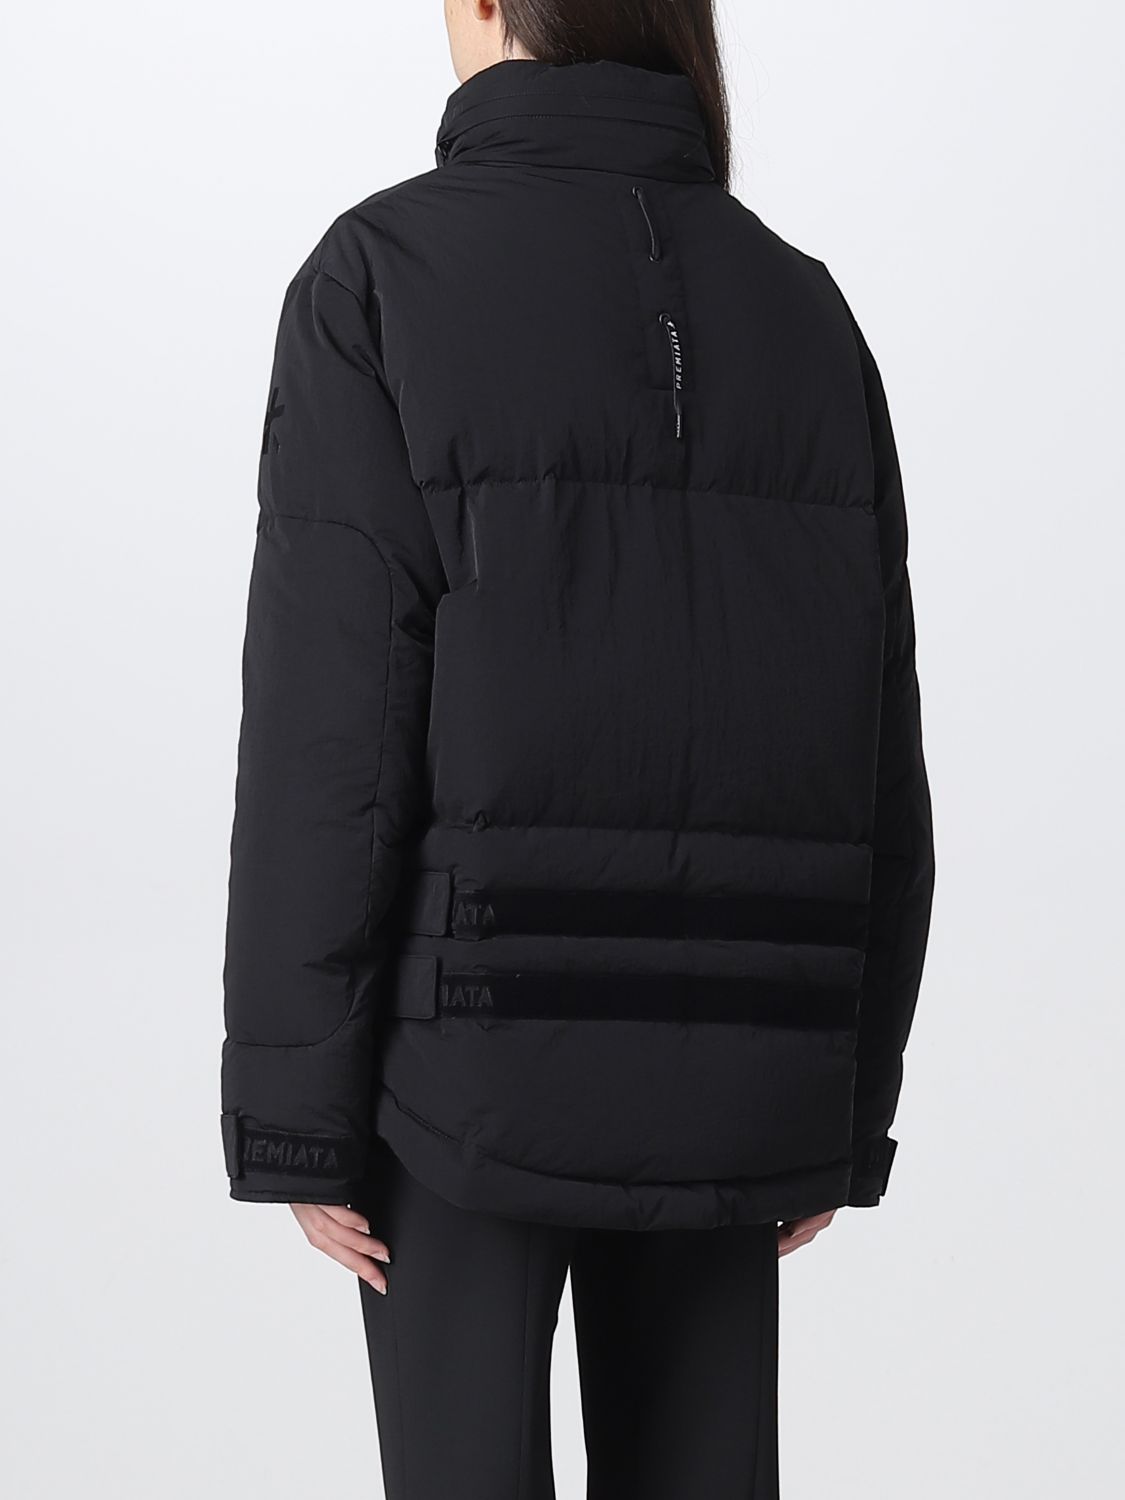 PREMIATA: jacket for woman - Black | Premiata jacket PR01D200 online on ...